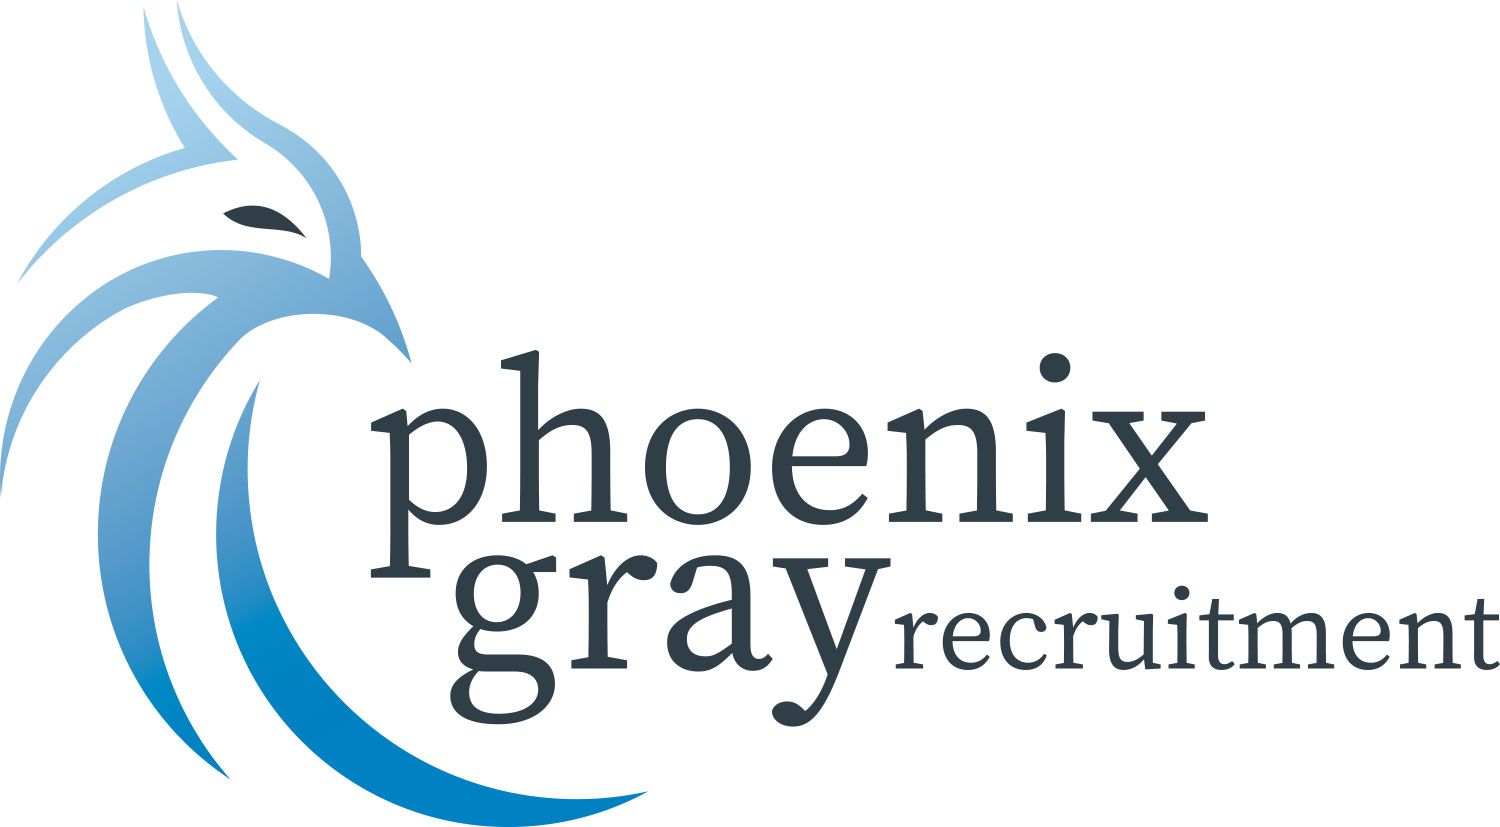 Phoenix Gray Recruitment